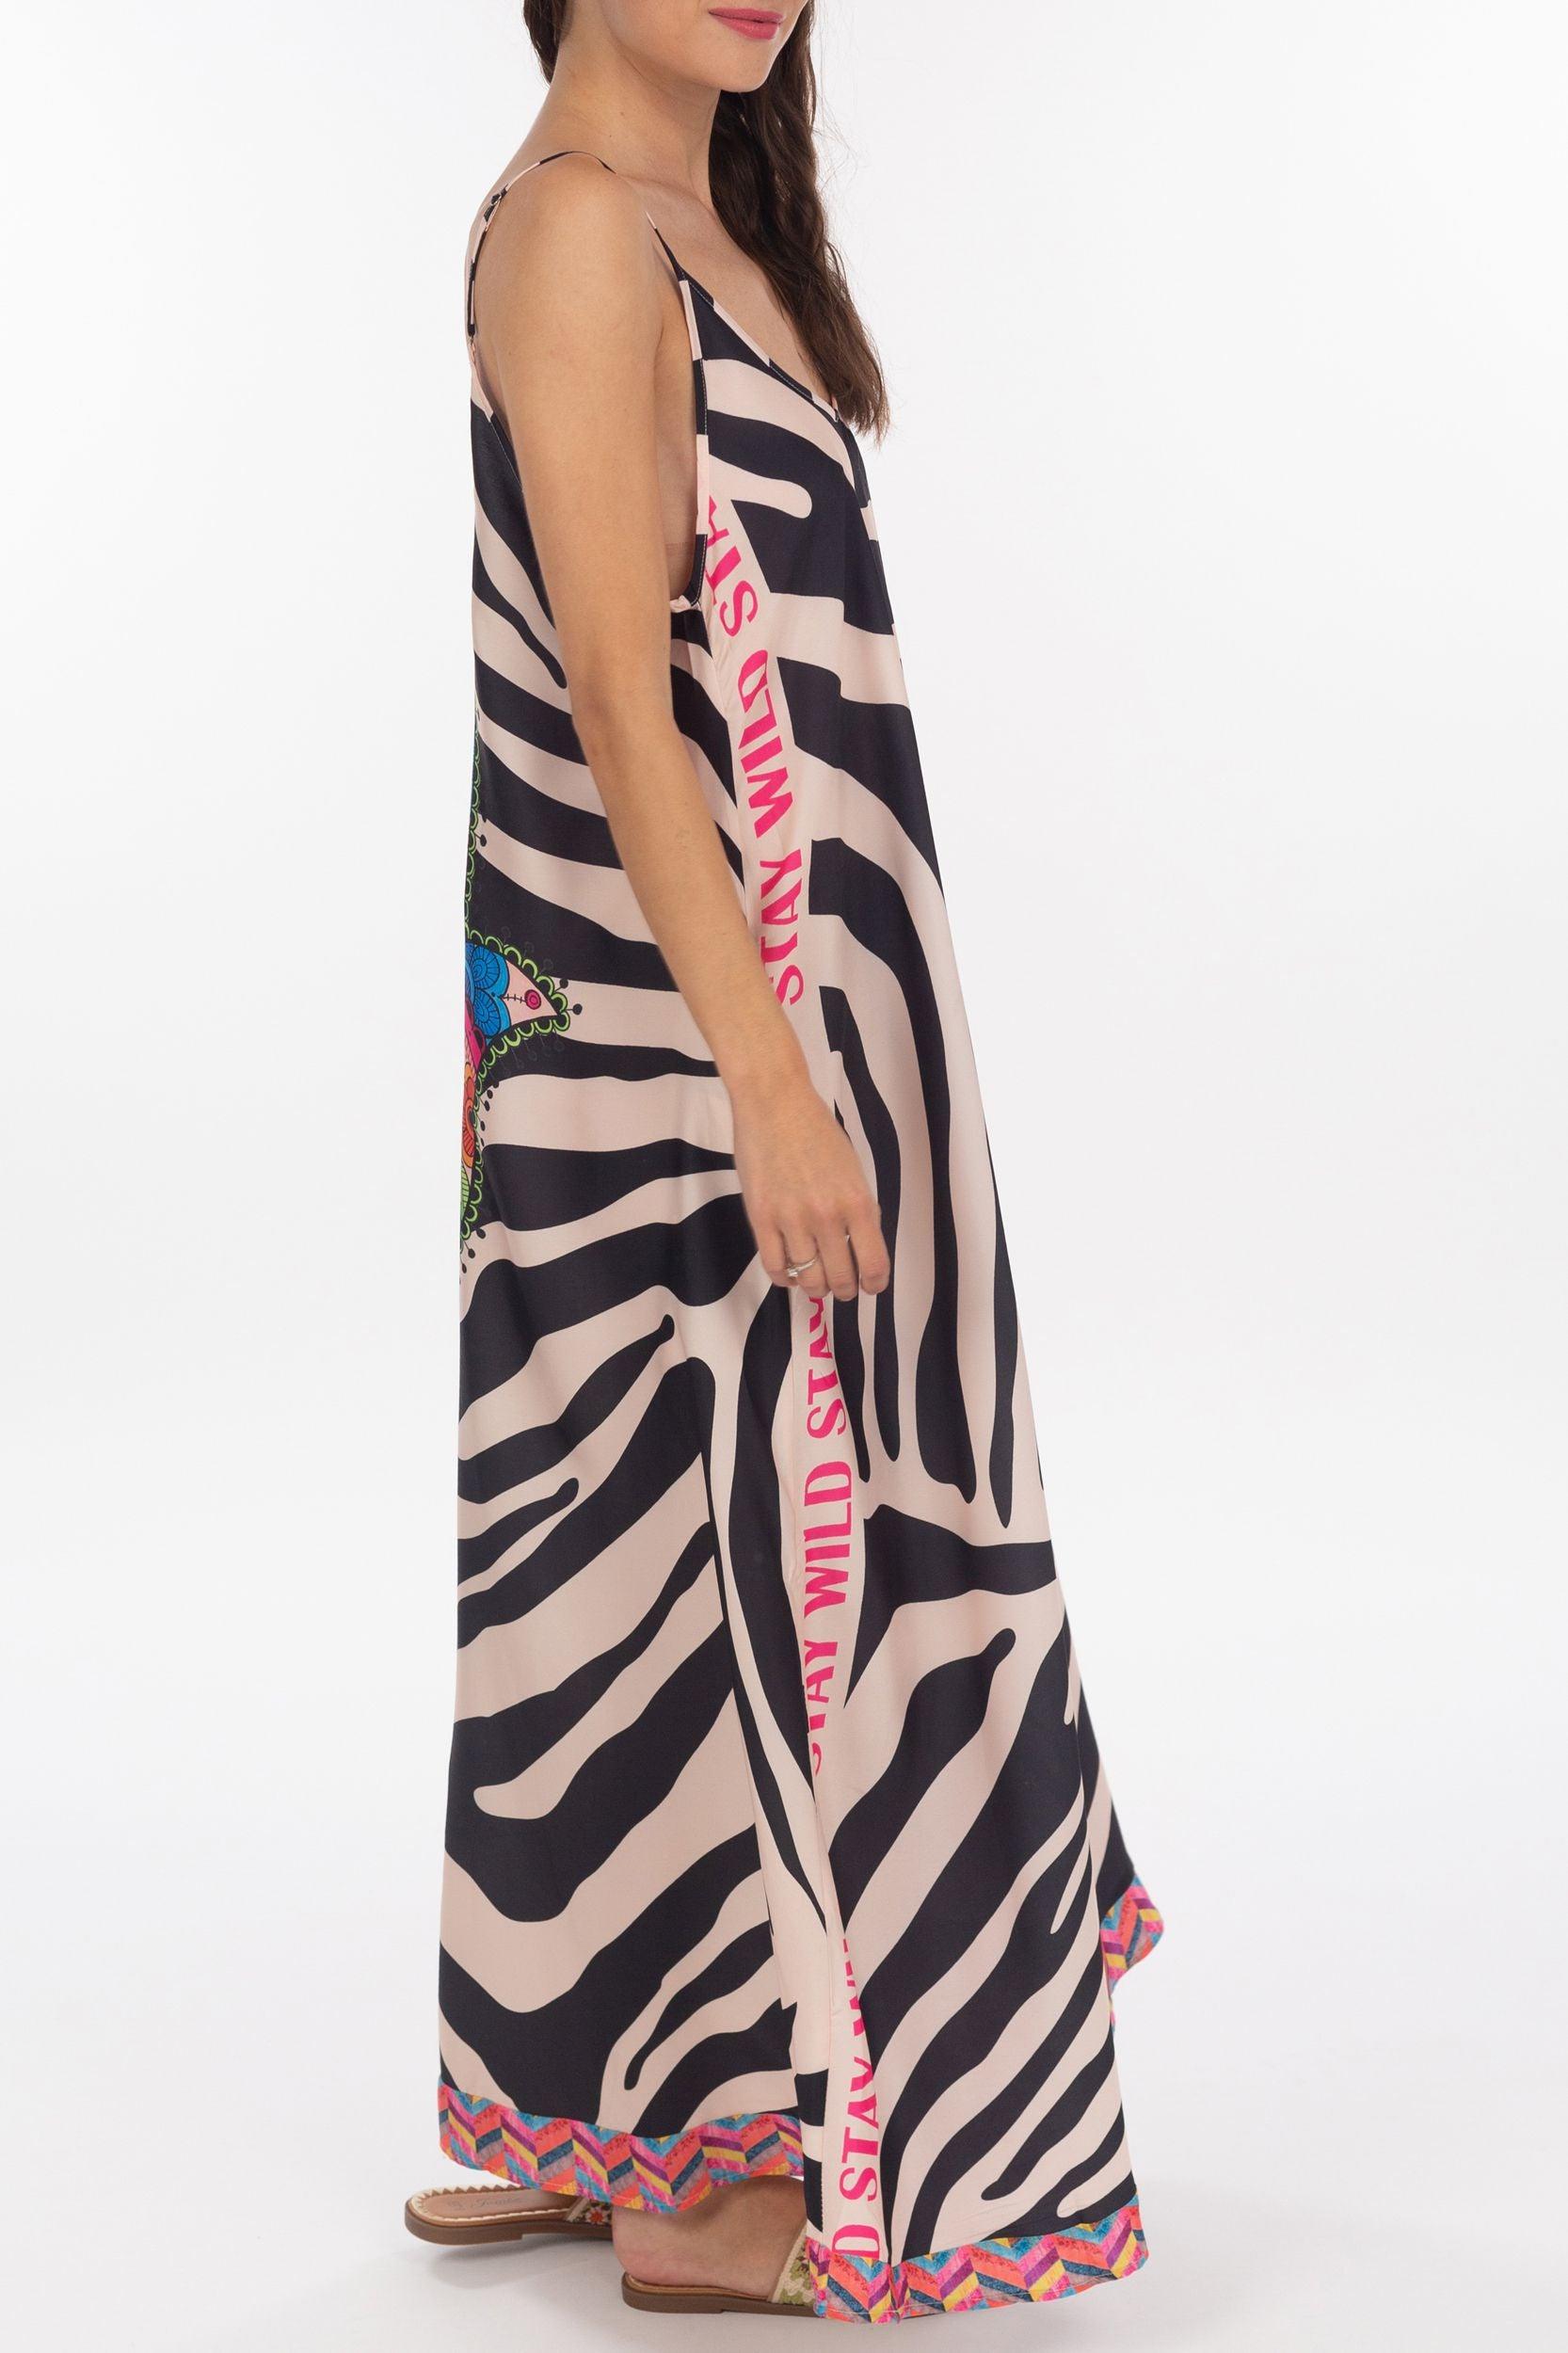 Viskosekleid mit Zebra-Muster - La Strada